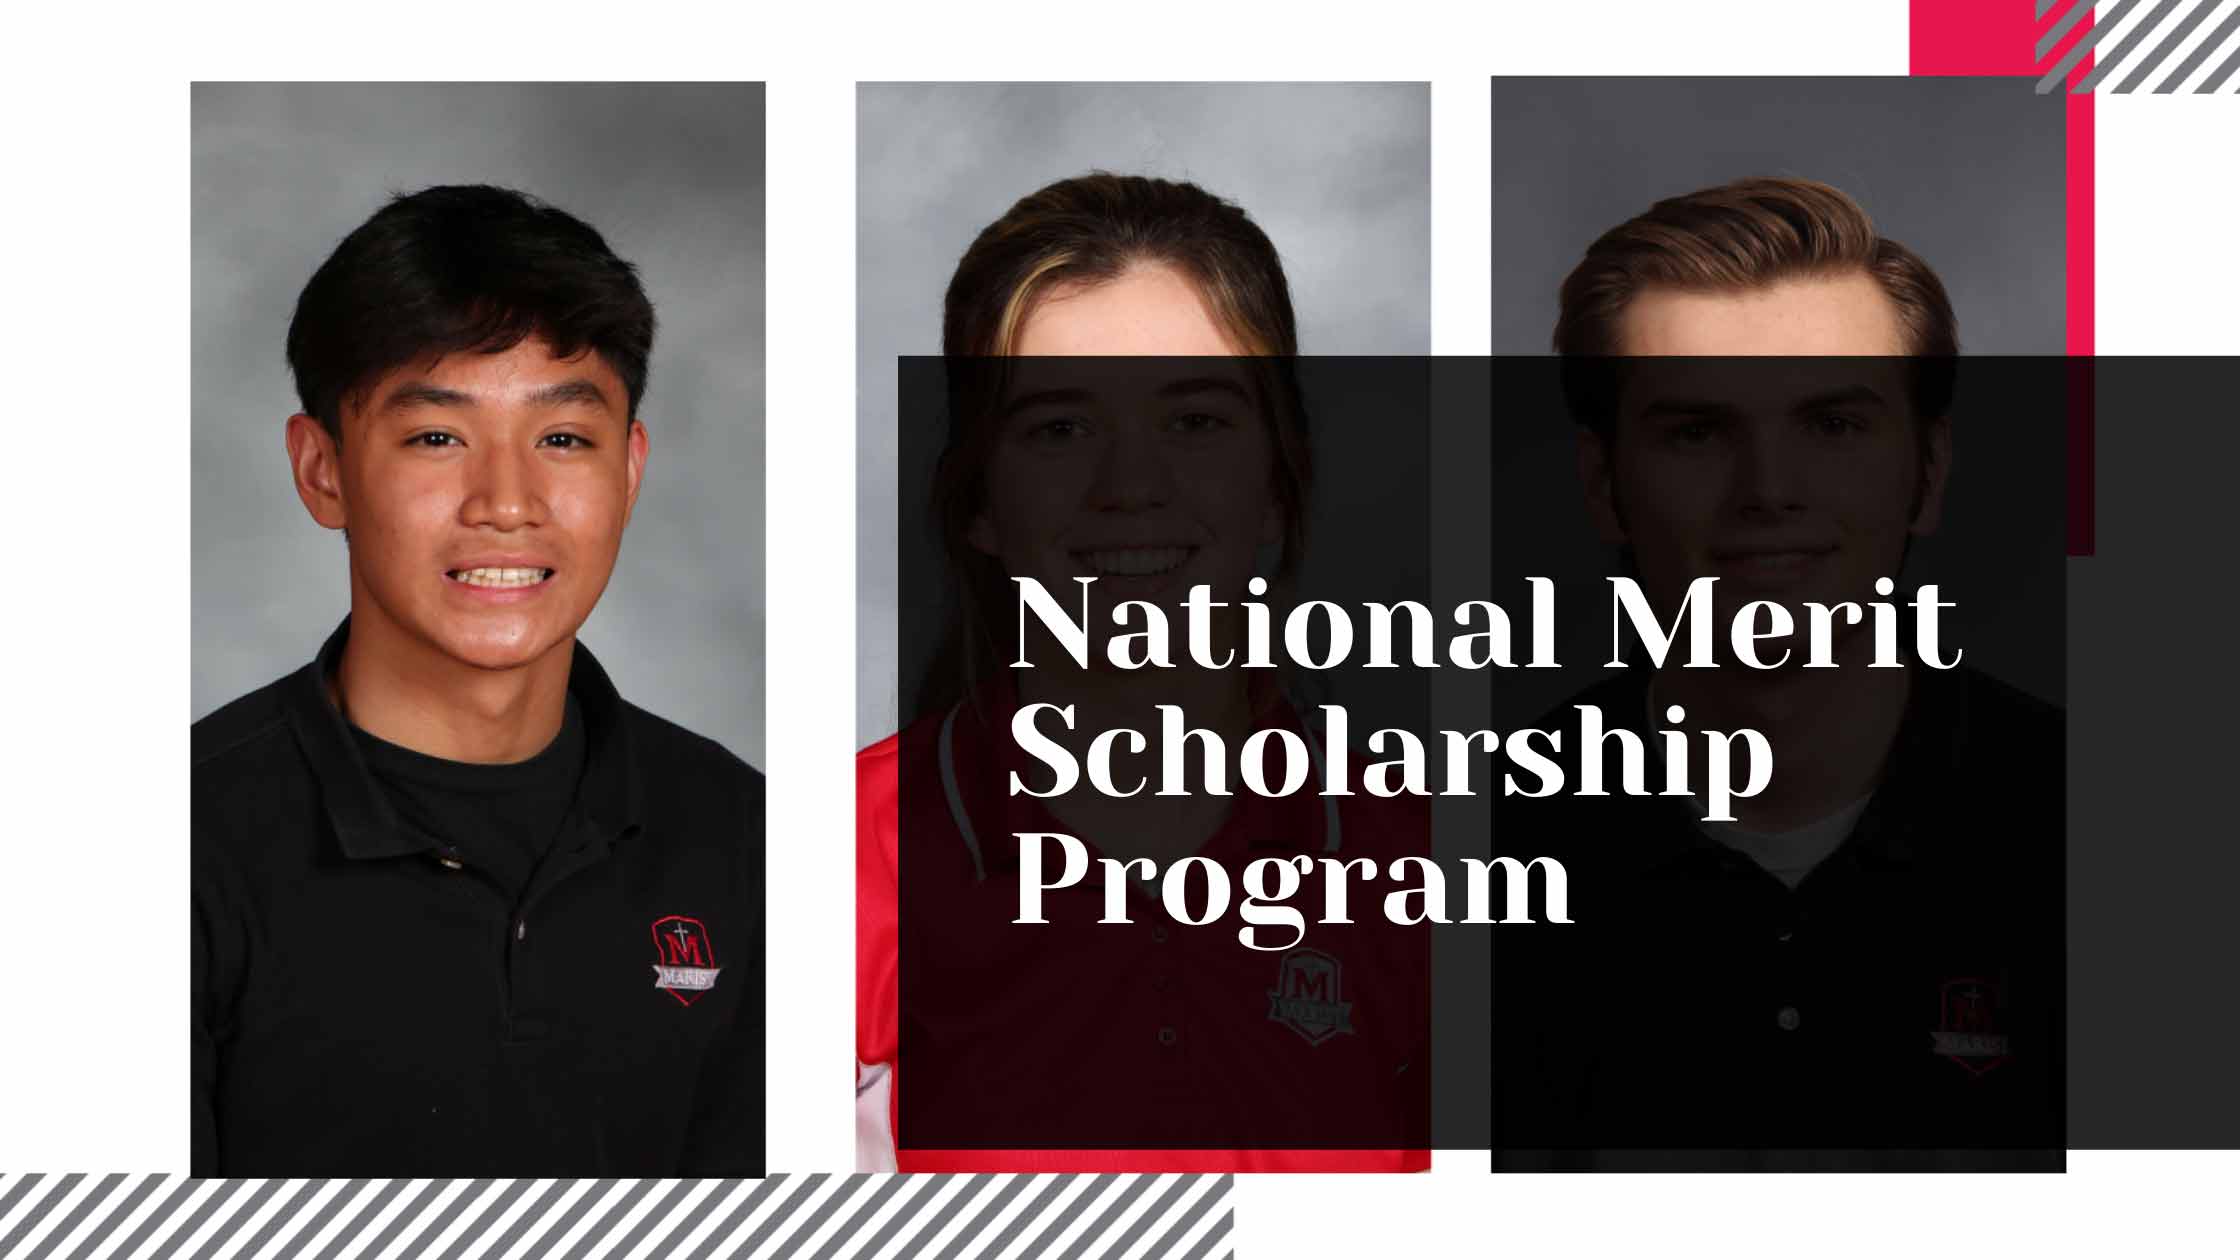 The National Merit Scholarship Program Recognizes 3 Marist Students